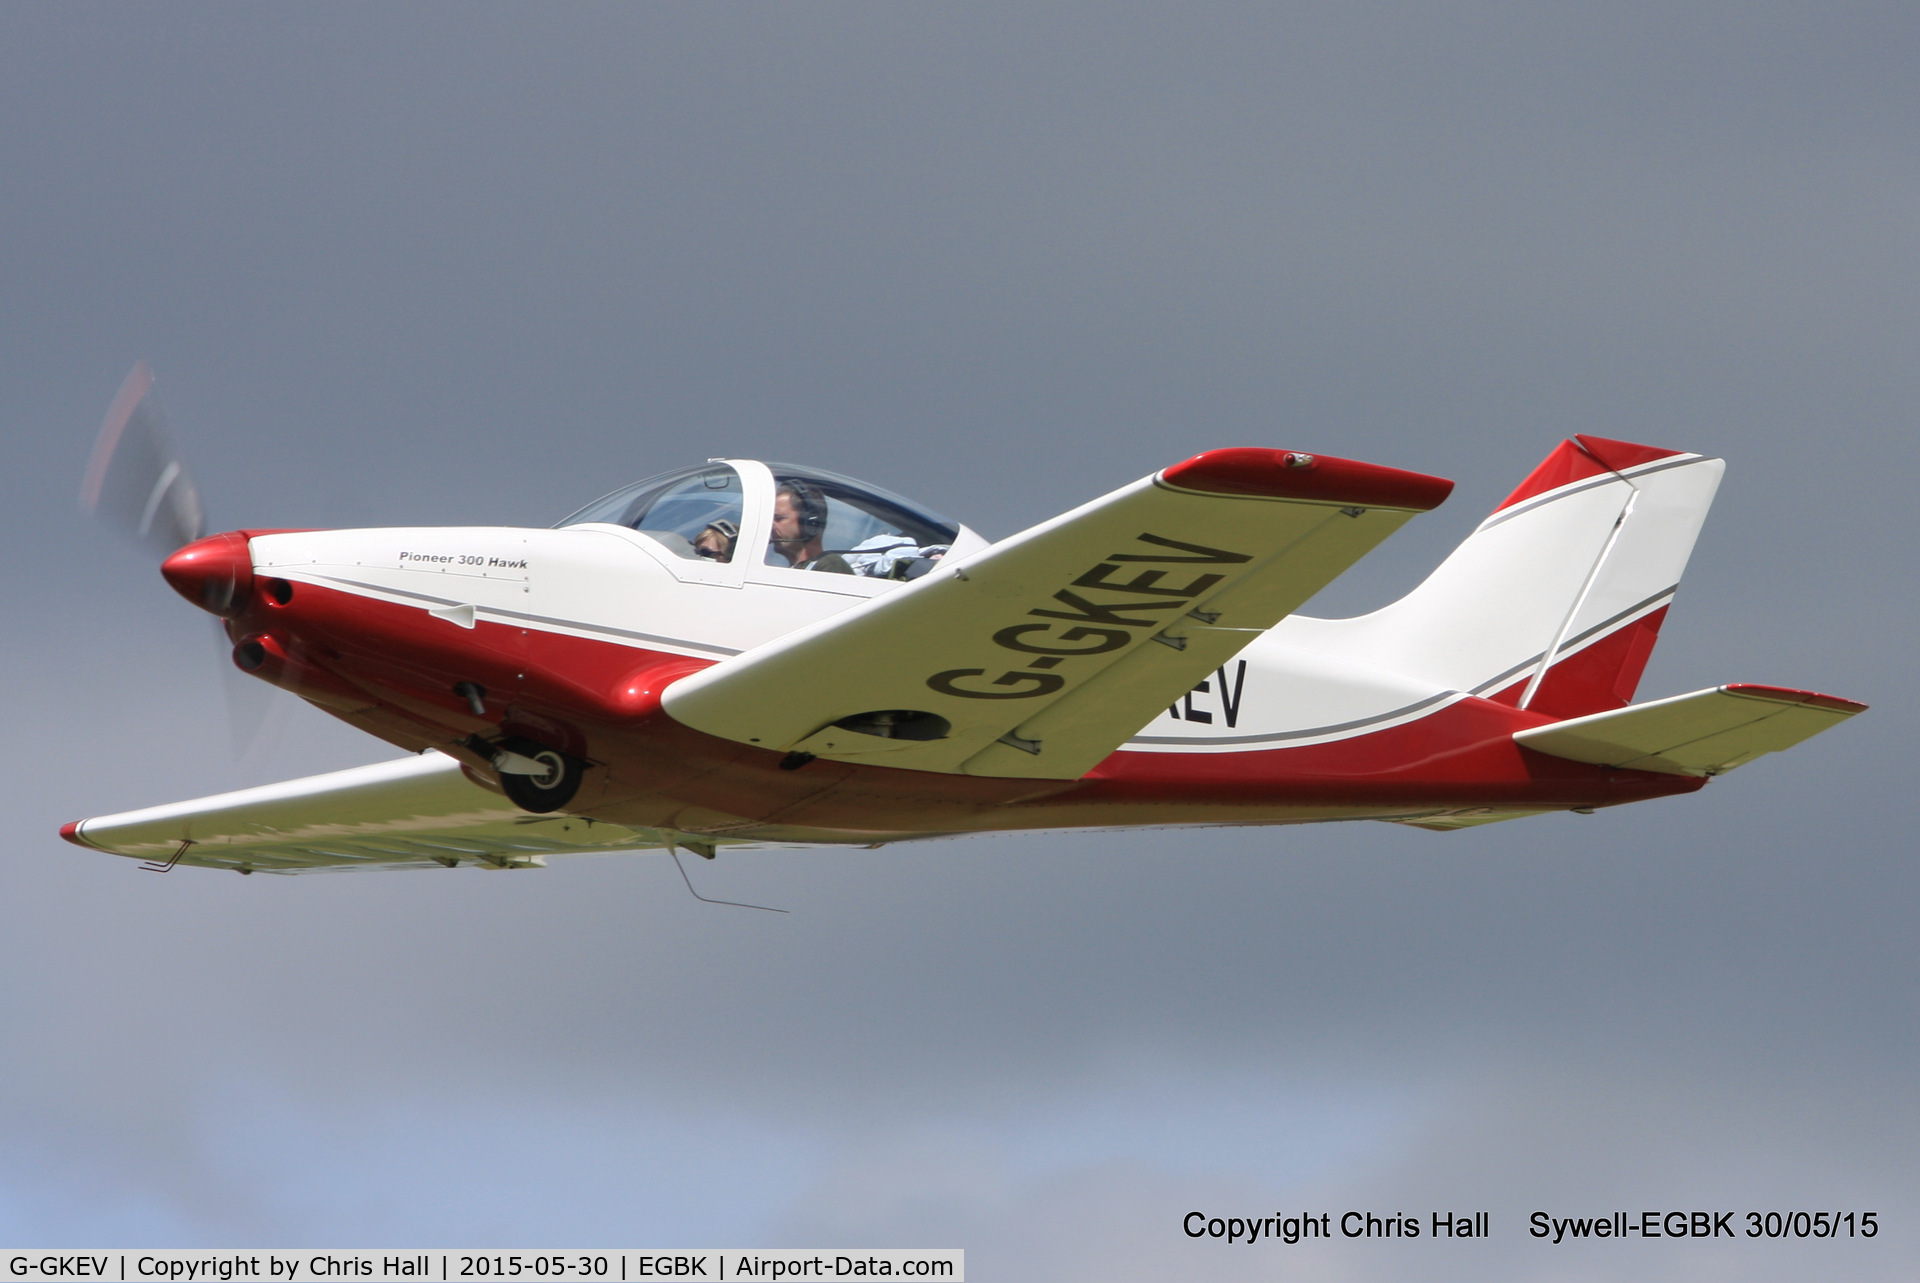 G-GKEV, 2010 Alpi Aviation Pioneer 300 Hawk C/N LAA 330A-14965, at Aeroexpo 2015